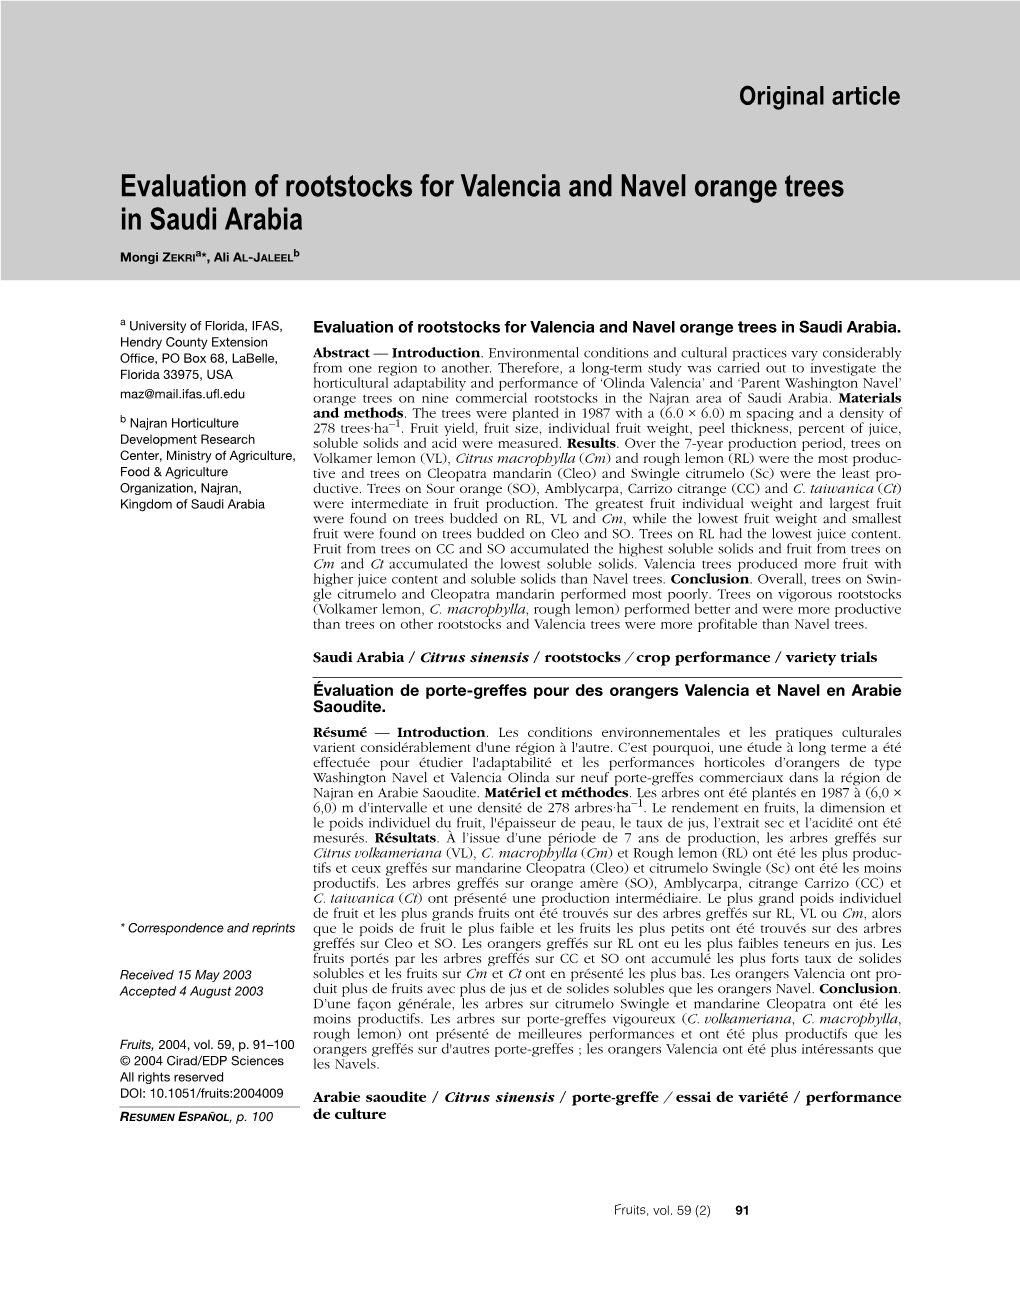 Evaluation of Rootstocks for Valencia and Navel Orange Trees in Saudi Arabia